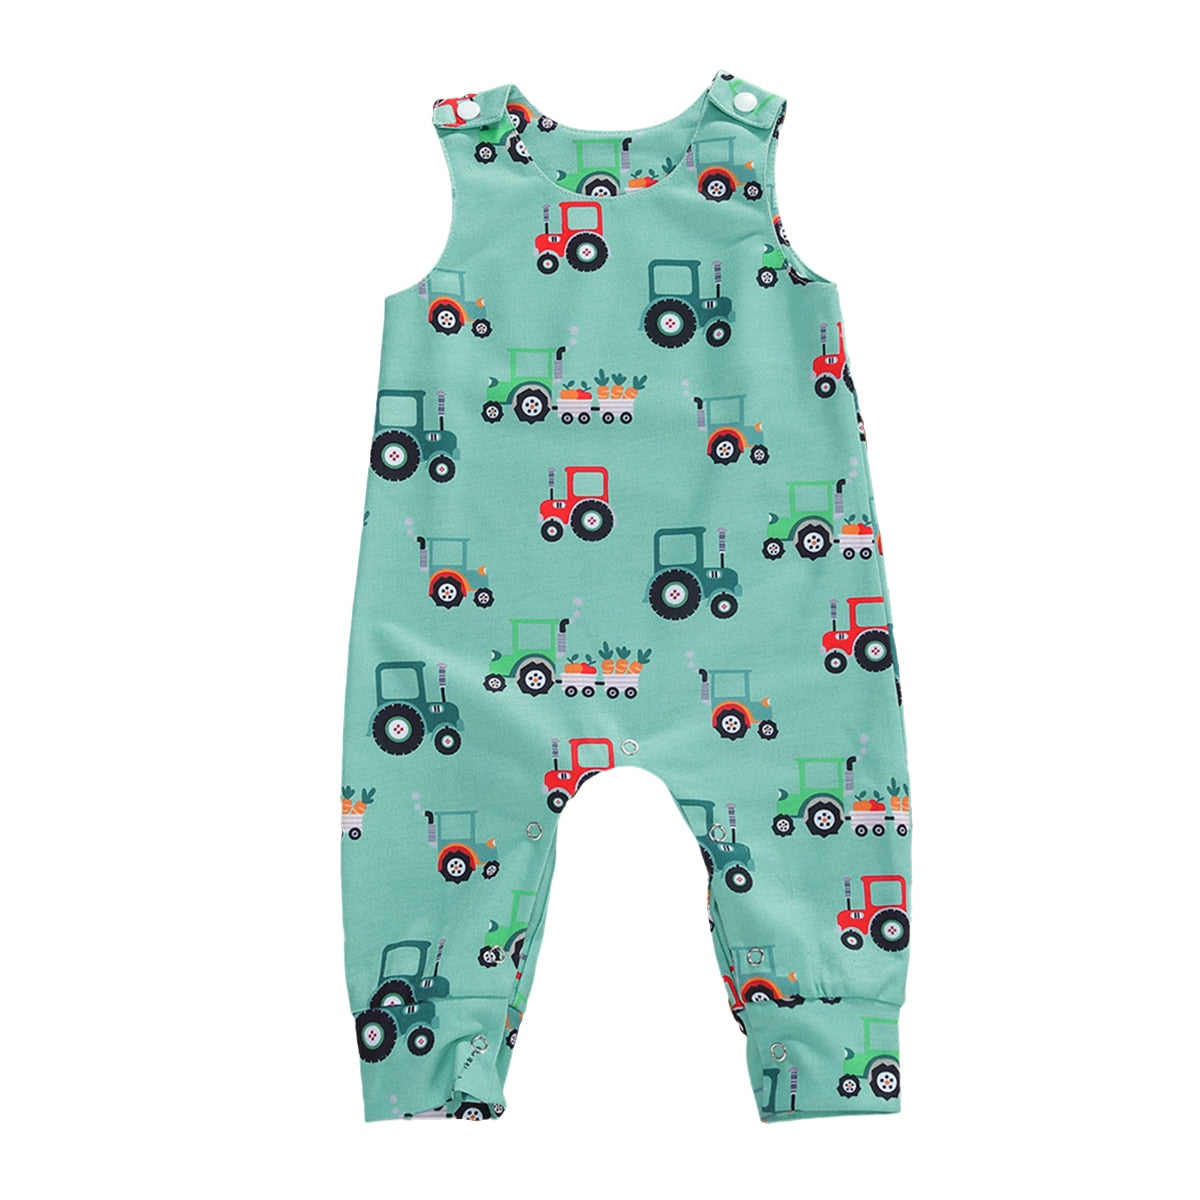 Citgeett Summer Newborn Baby Boys Girls Cotton Romper Sleeveless Button Jumpsuit Playsuit Overalls Casual Outfits